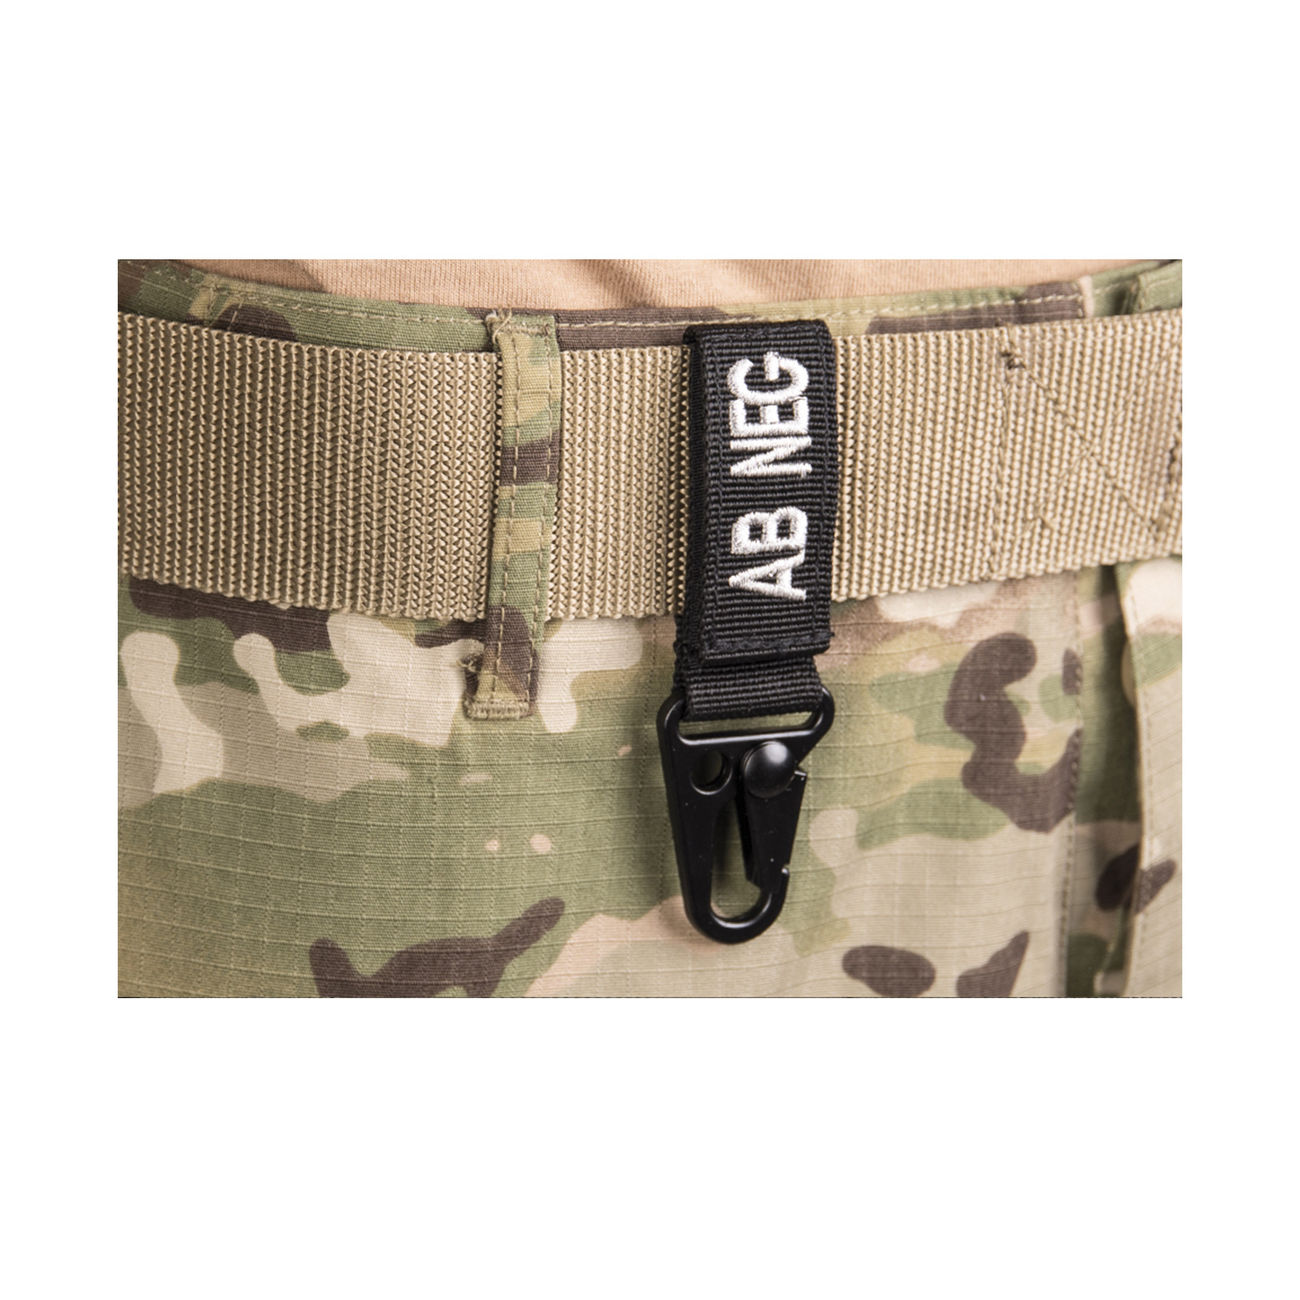 Mil-Tec Schlüsselanhänger Tactical Keyholder Blutgruppe AB negativ schwarz 5 Stück Bild 1